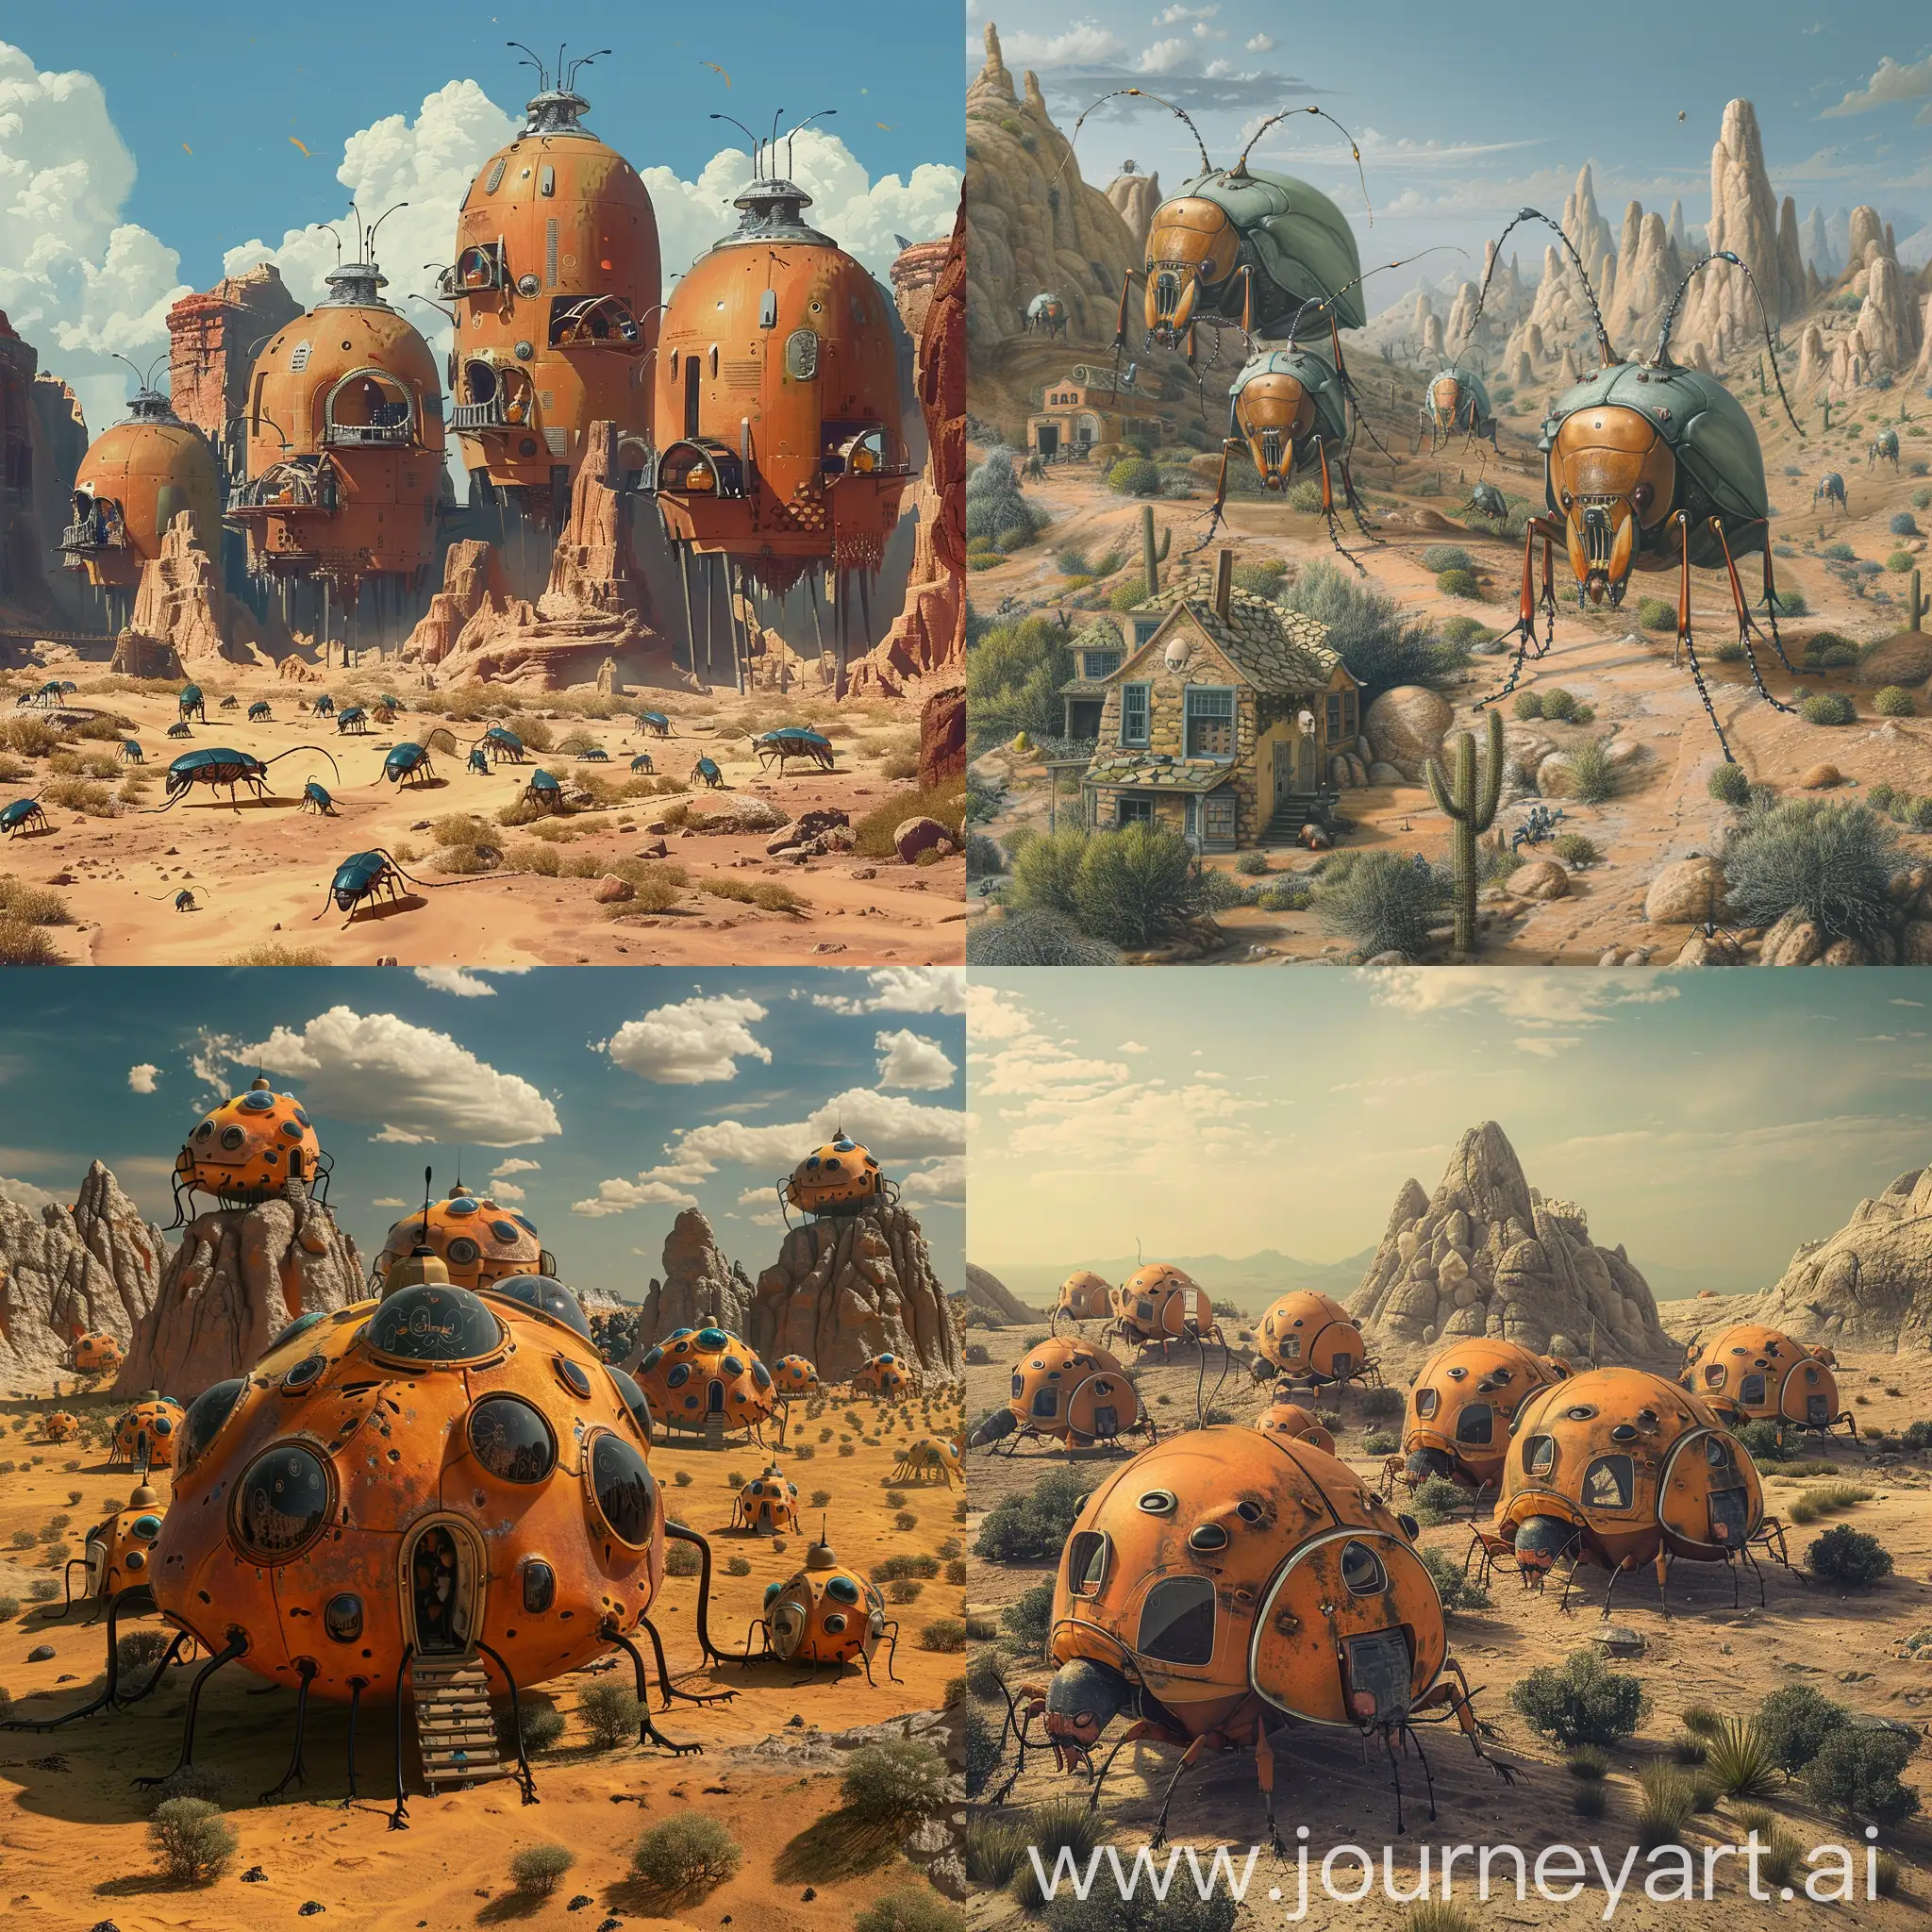 Surreal-Desert-Landscape-with-BeetleInhabited-Dwellings